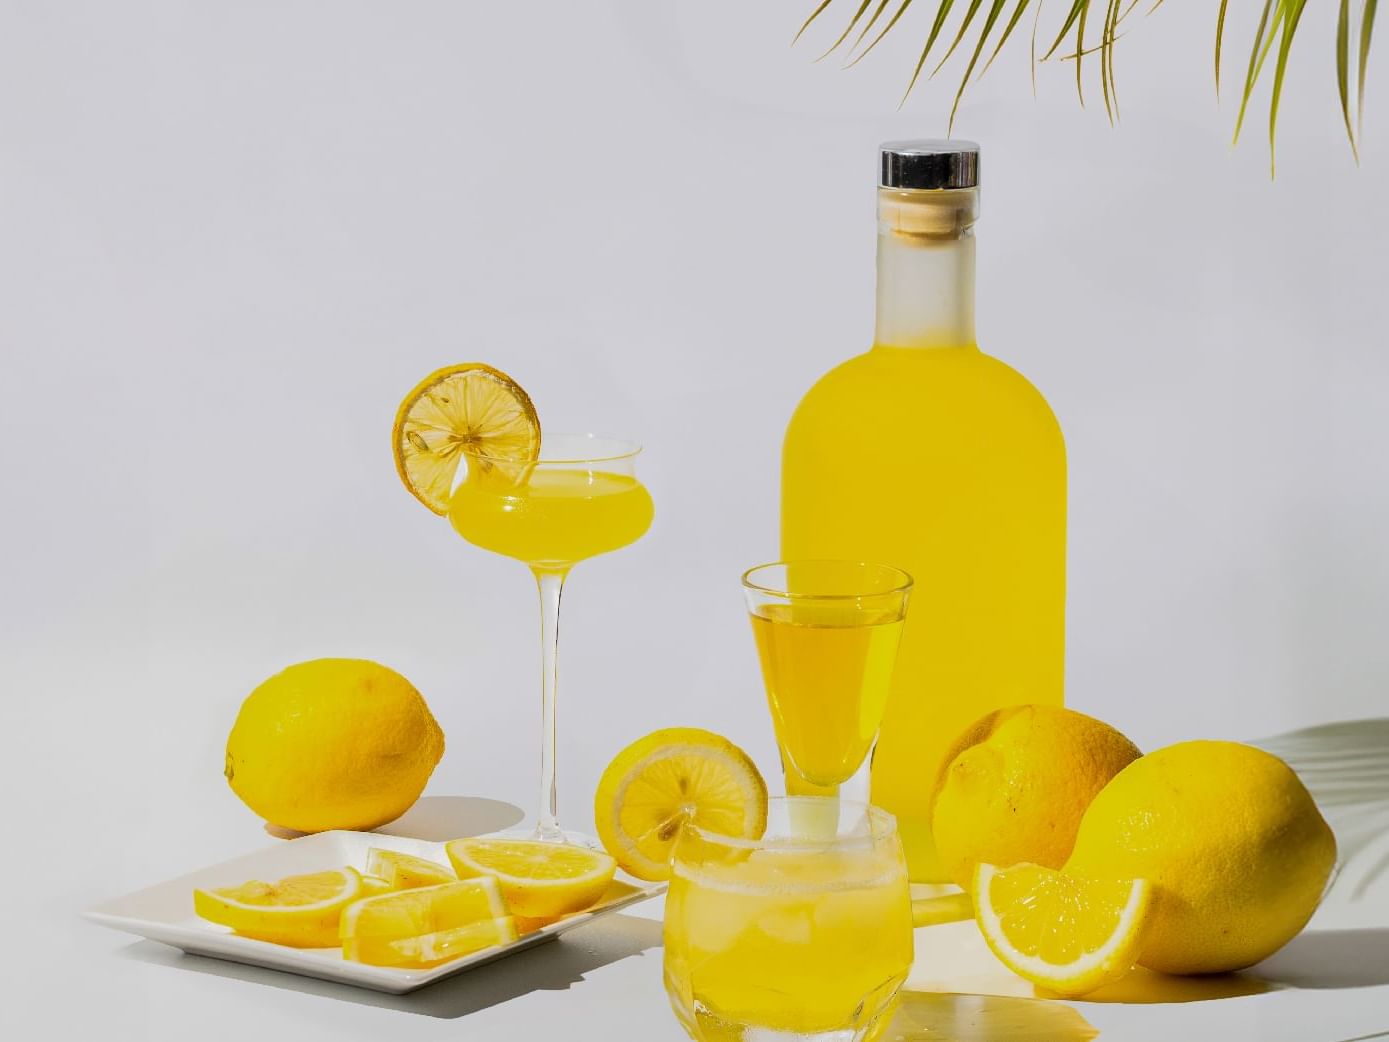  Refreshing lemonade served with fresh lemons on a plate.